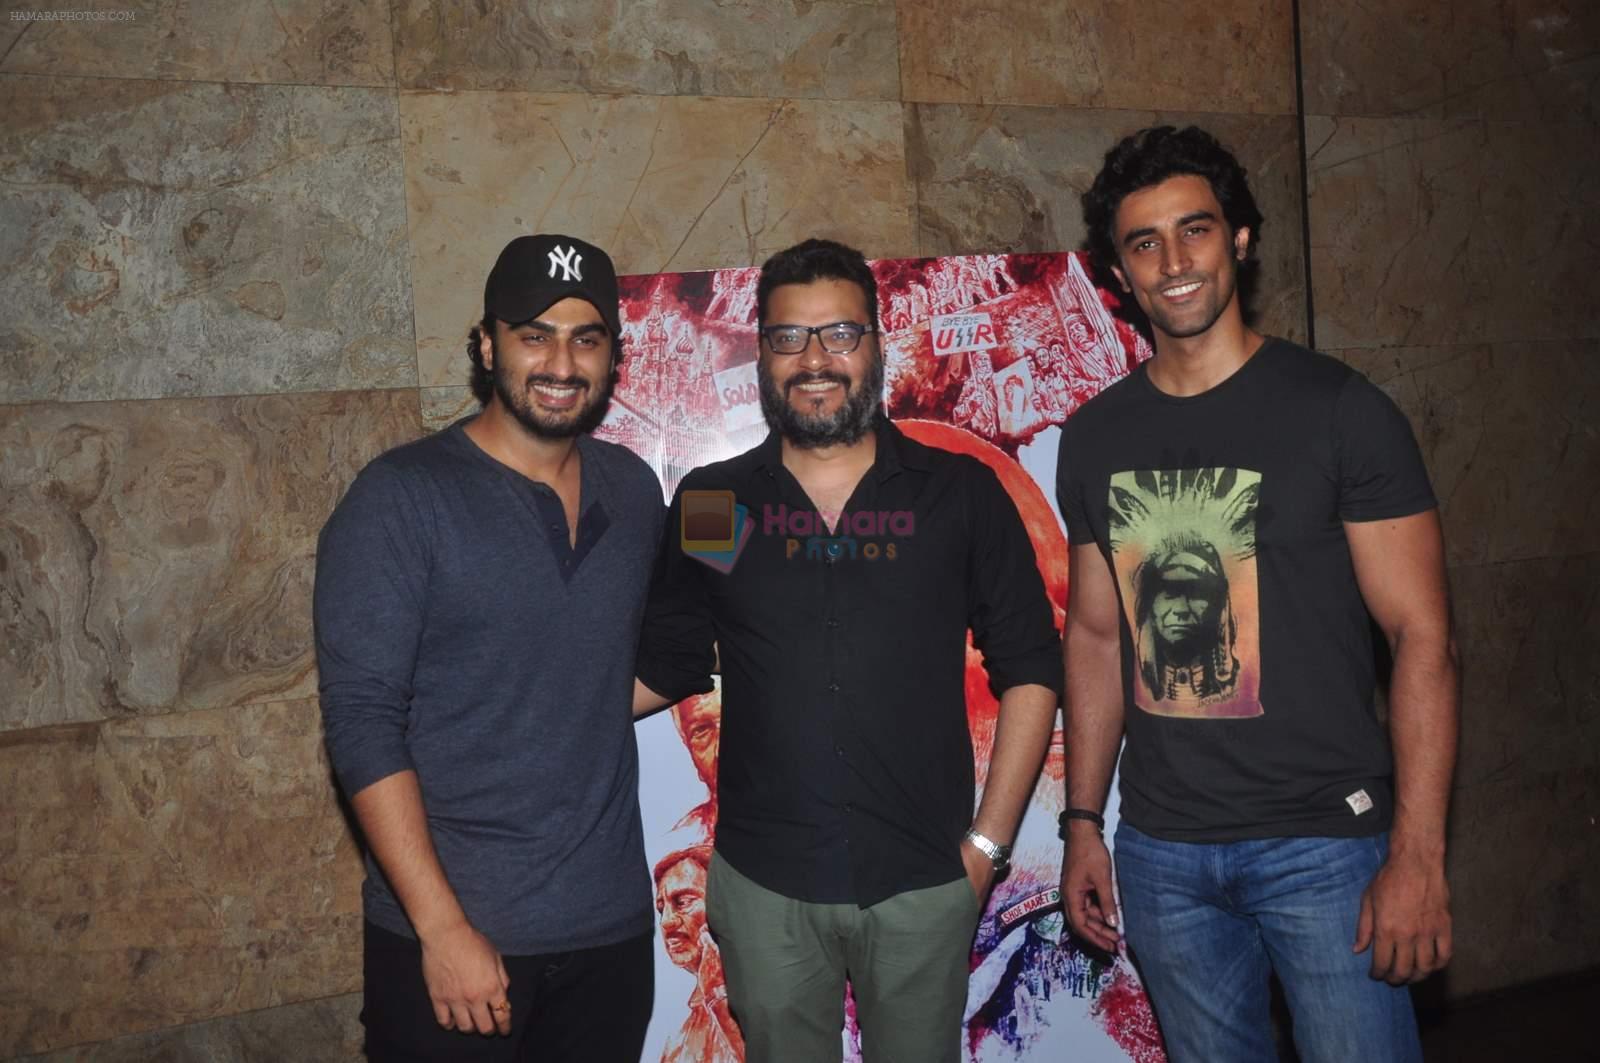 Arjun Kapoor, Kunal Kapoor, Atul Sabharwal at In Their shoes screening in Lightbox, Mumbai on 10th March 2015